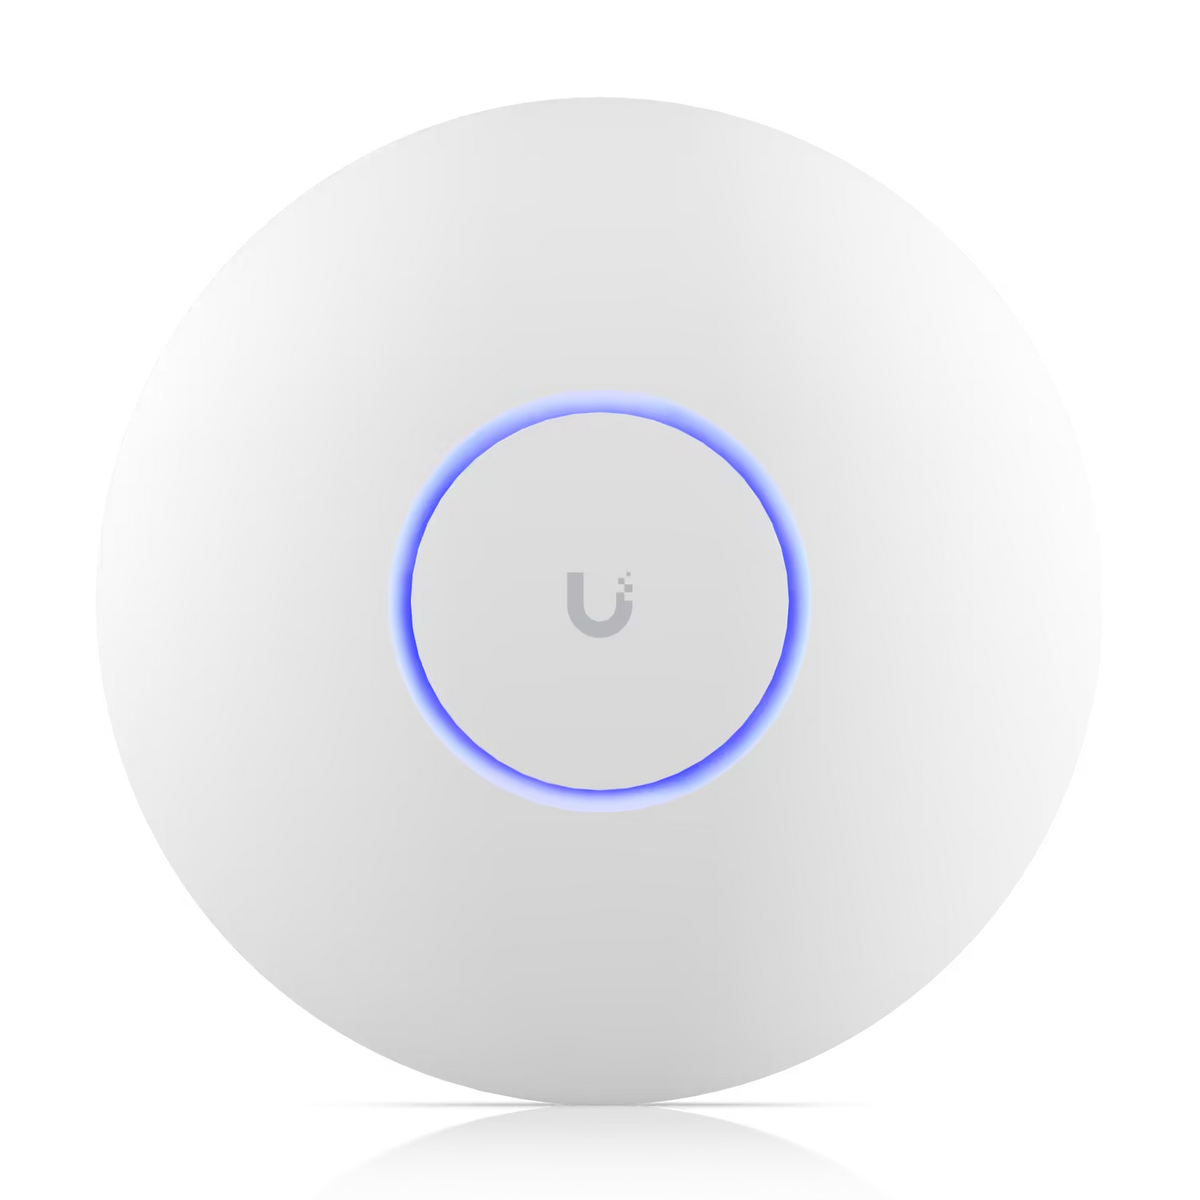 Ubiquiti Networks UniFi U7 Pro Tri-Band Wi-Fi 7 Access Point